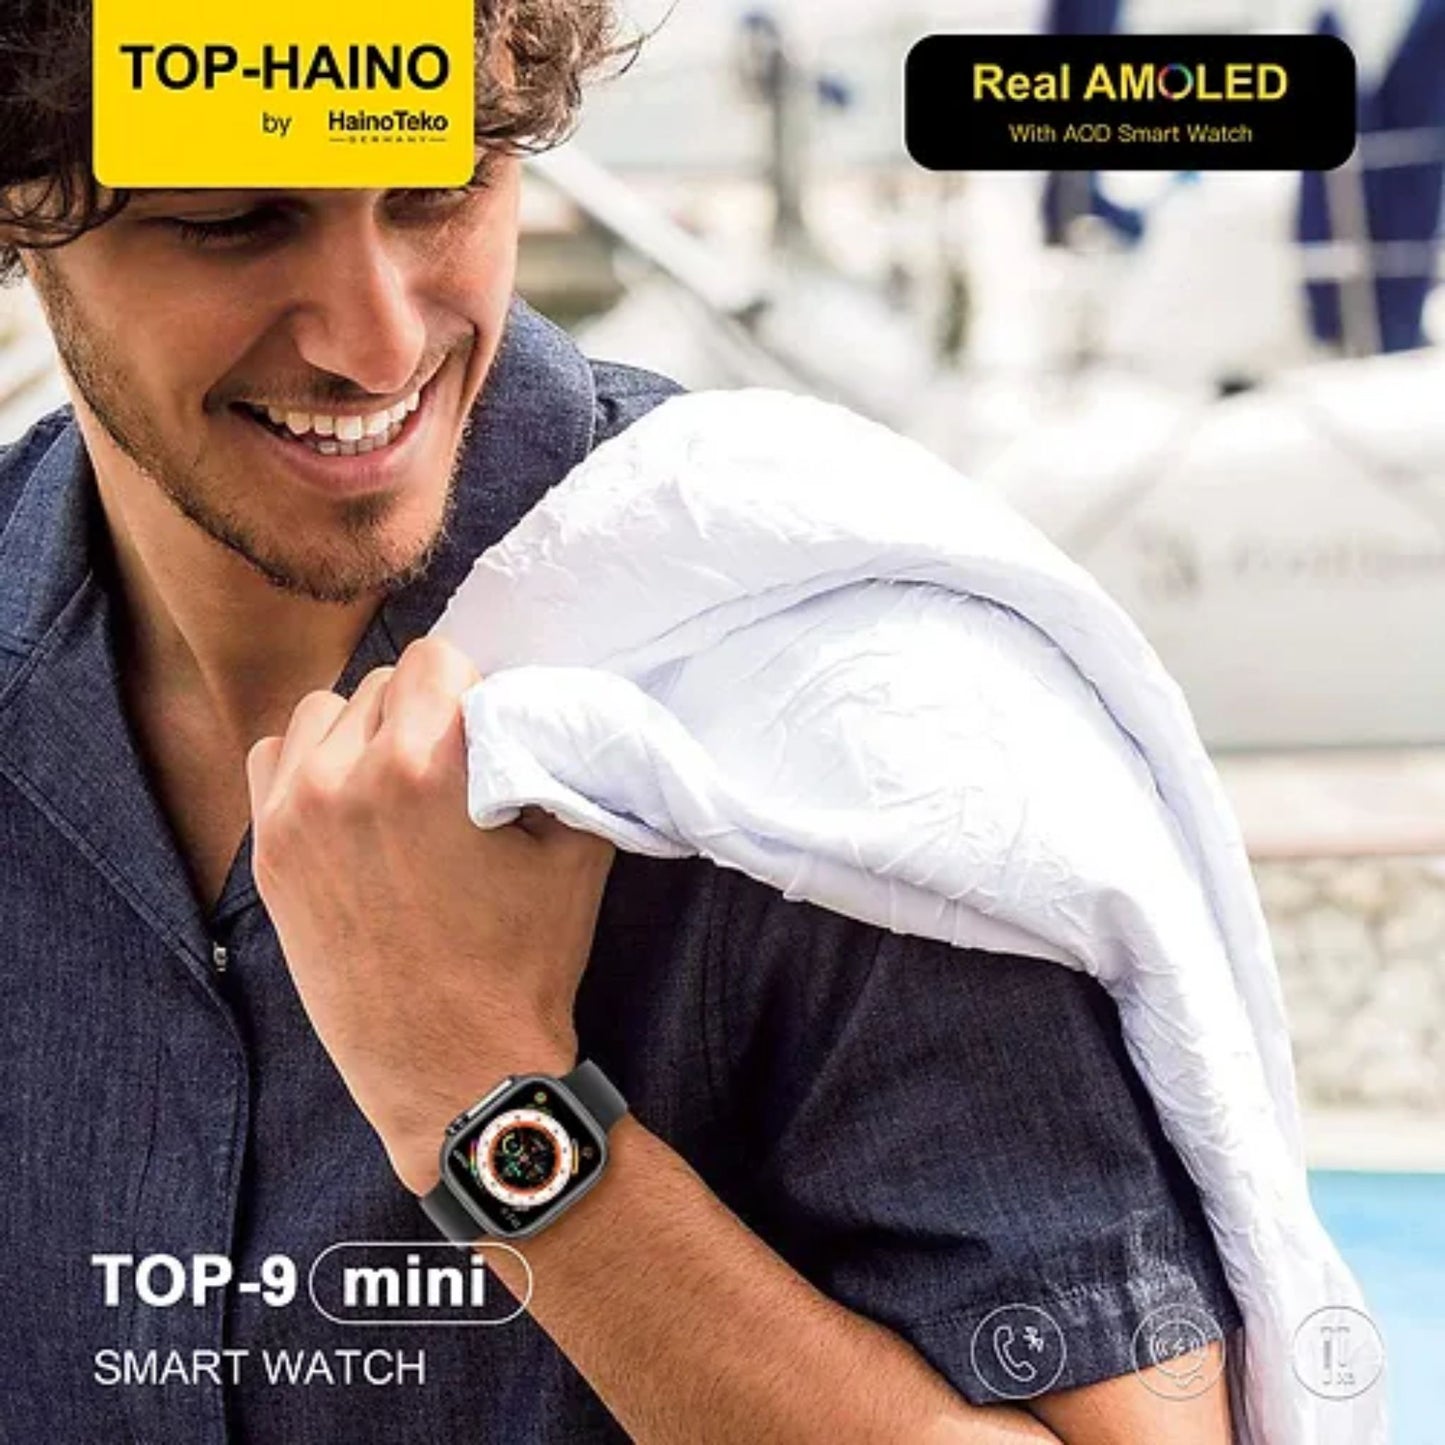 Premium Haino Teko Germany Top 9 MINI_Real AMOLED with Always on Display Smart Watch with 3 Straps_Black